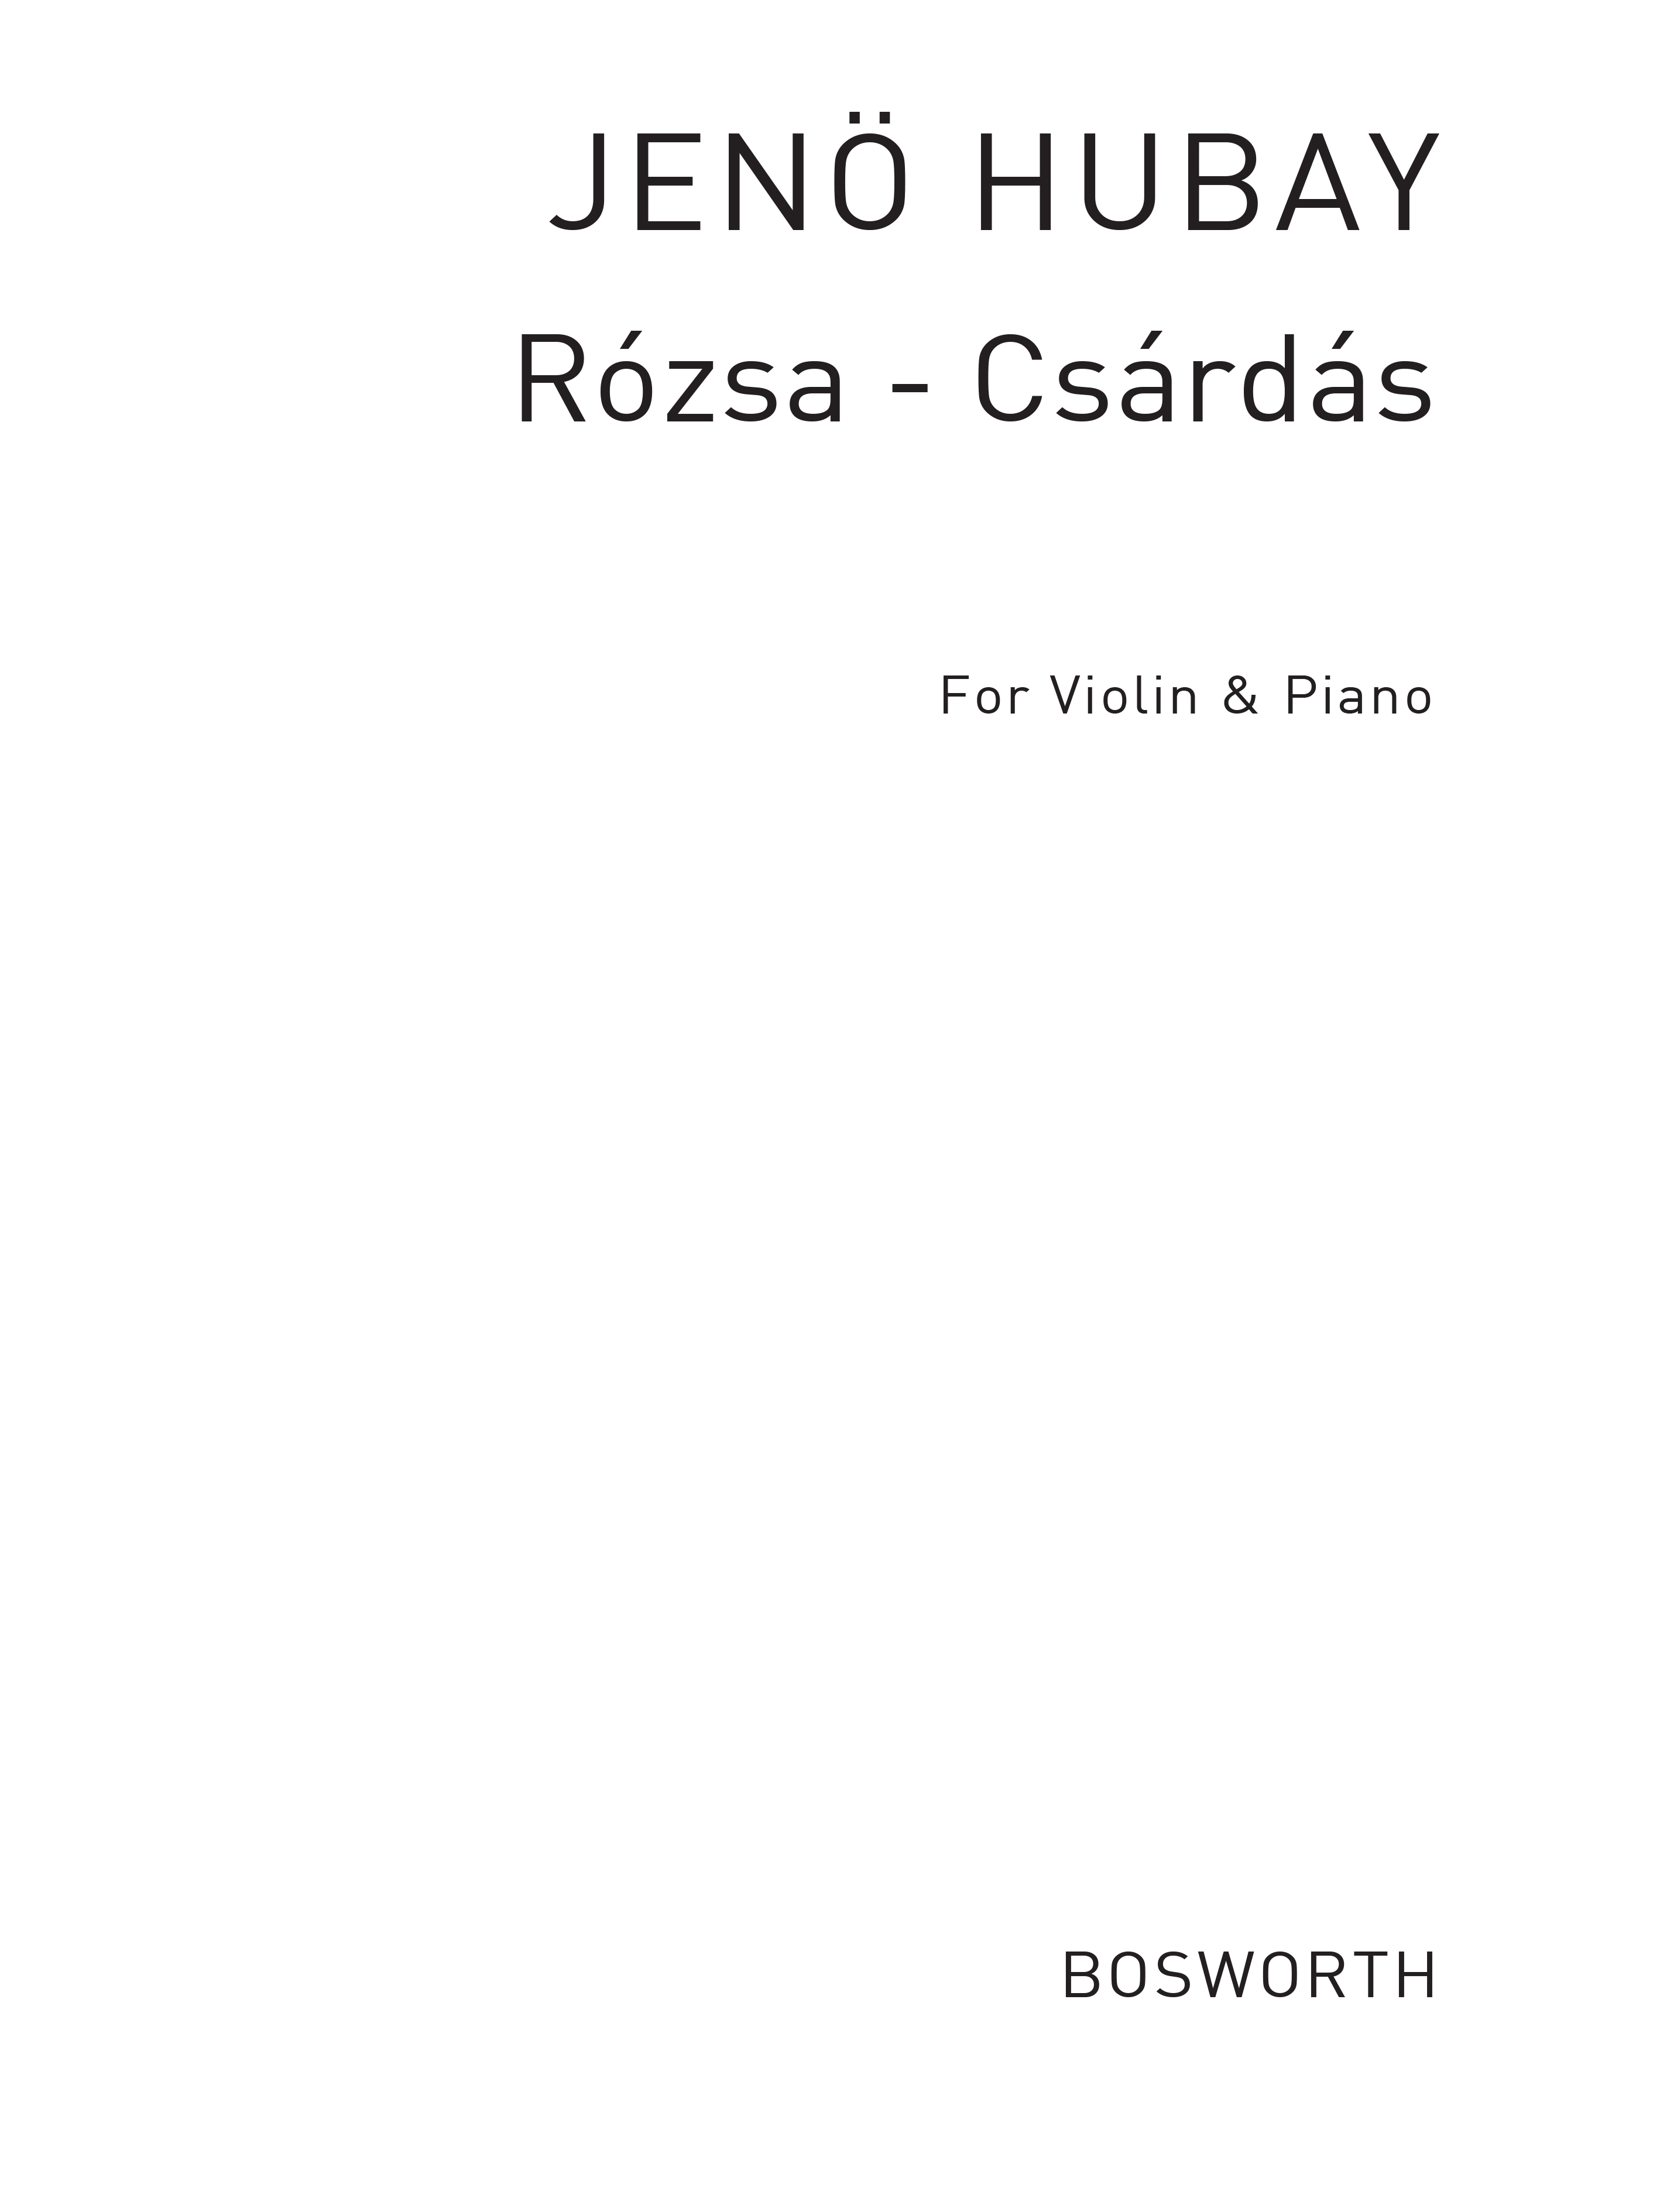 Jeno Hubay: Jeno Hubay: Rosza Czardas For Violin And Piano: Violin: Instrumental